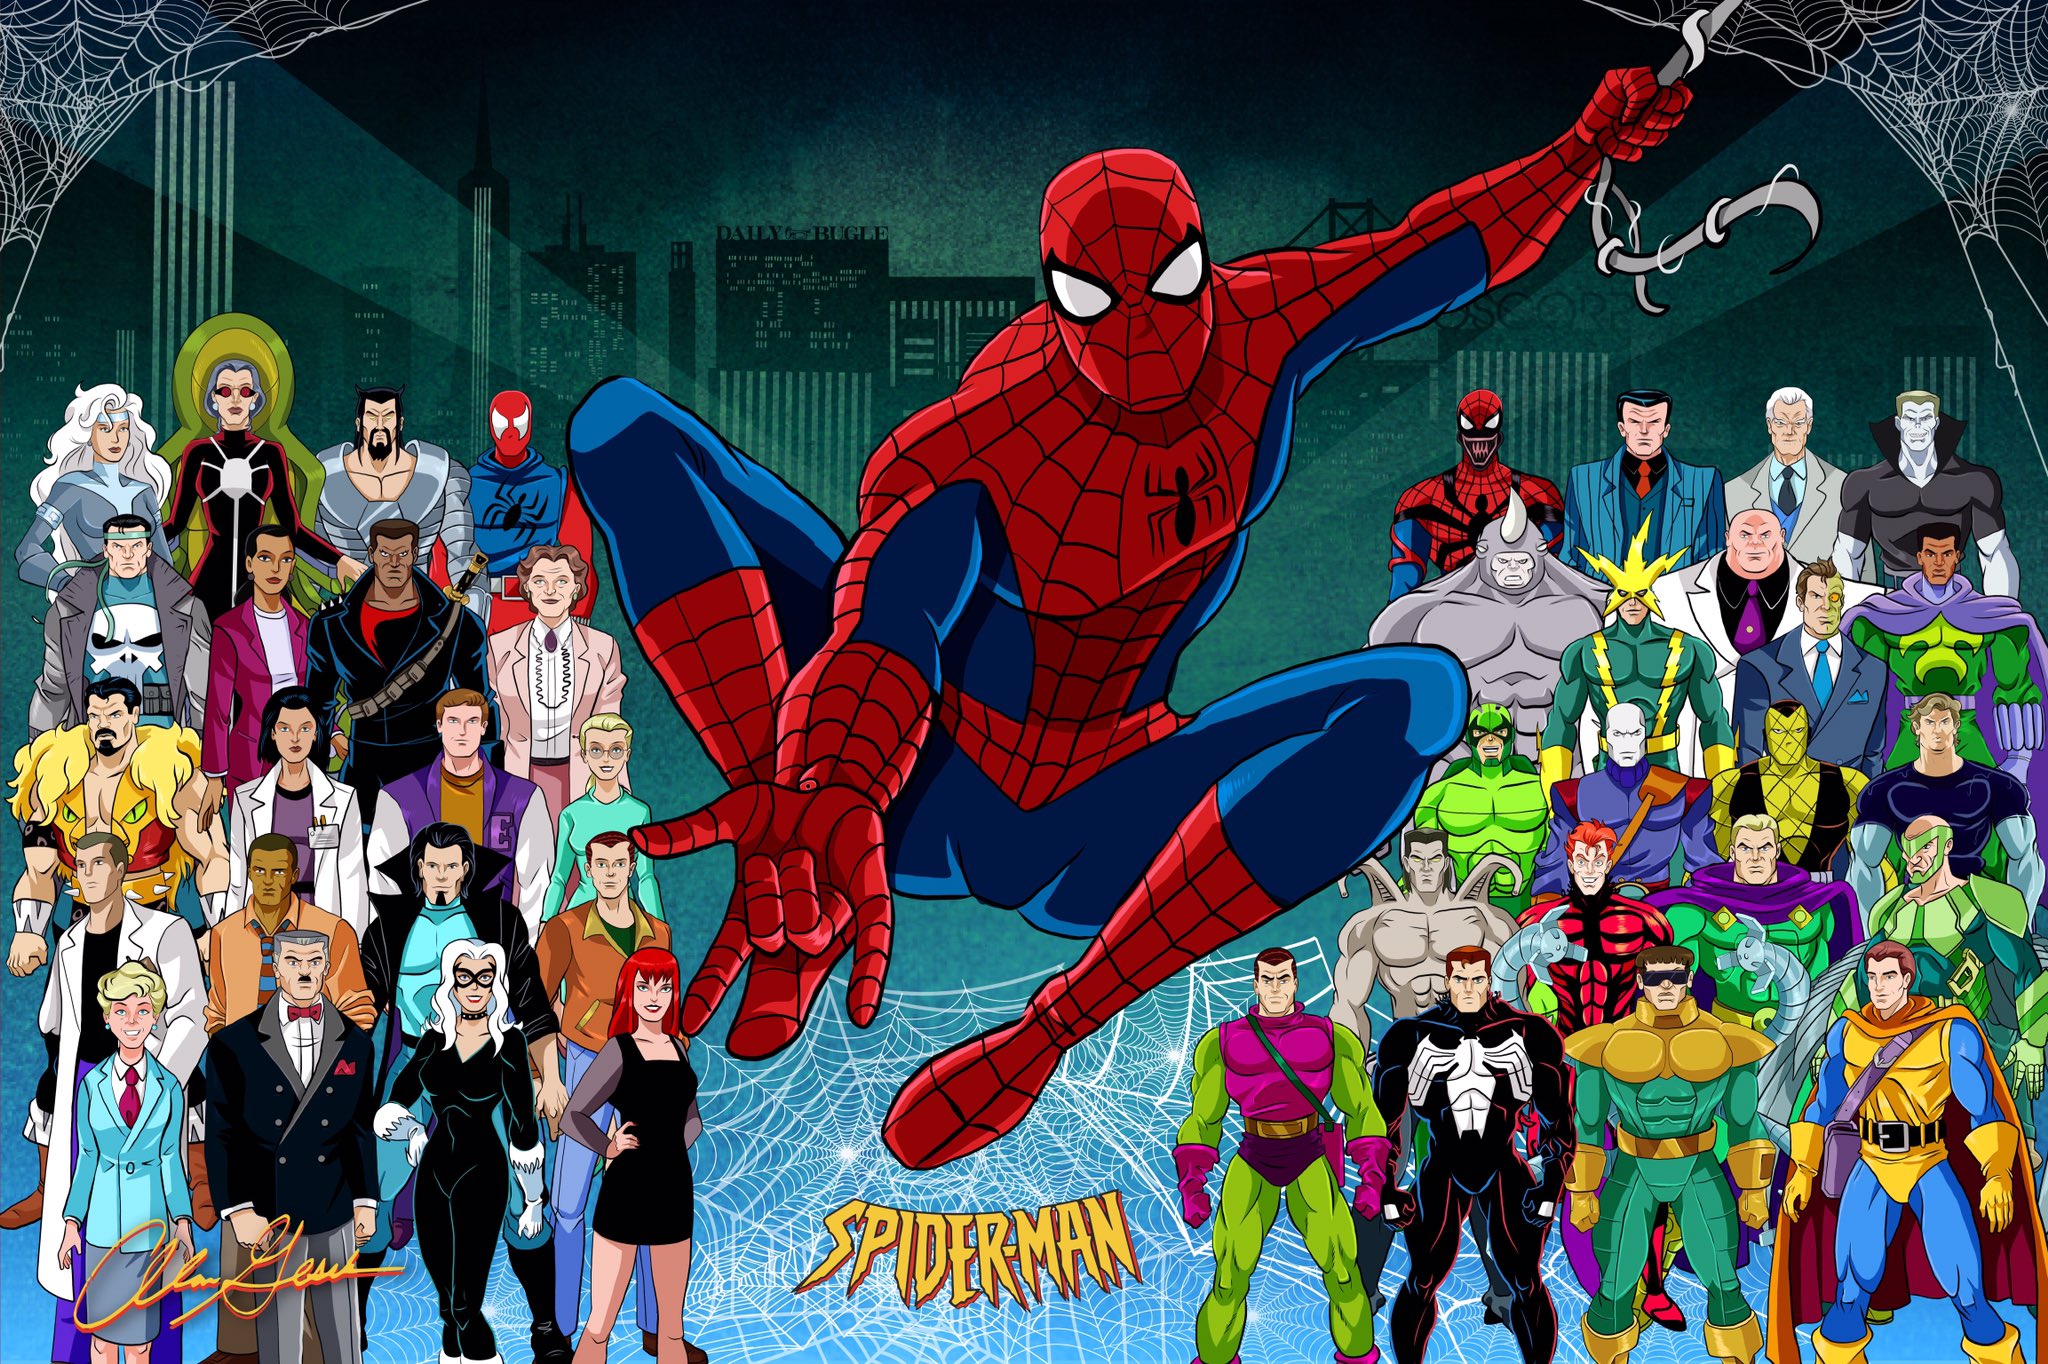 tv show, spider man: the animated series, aunt may parker, ben reilly, black cat (marvel comics), blade (marvel comics), carnage (marvel comics), doctor octopus, electro (marvel comics), green goblin, harry osborn, hobgoblin (marvel comics), j jonah jameson, kingpin (marvel comics), mary jane watson, morbius the living vampire, mysterio (marvel comics), peter parker, punisher, scorpion (marvel comics), shocker (marvel comics), silver sable (marvel comics), spider man, venom